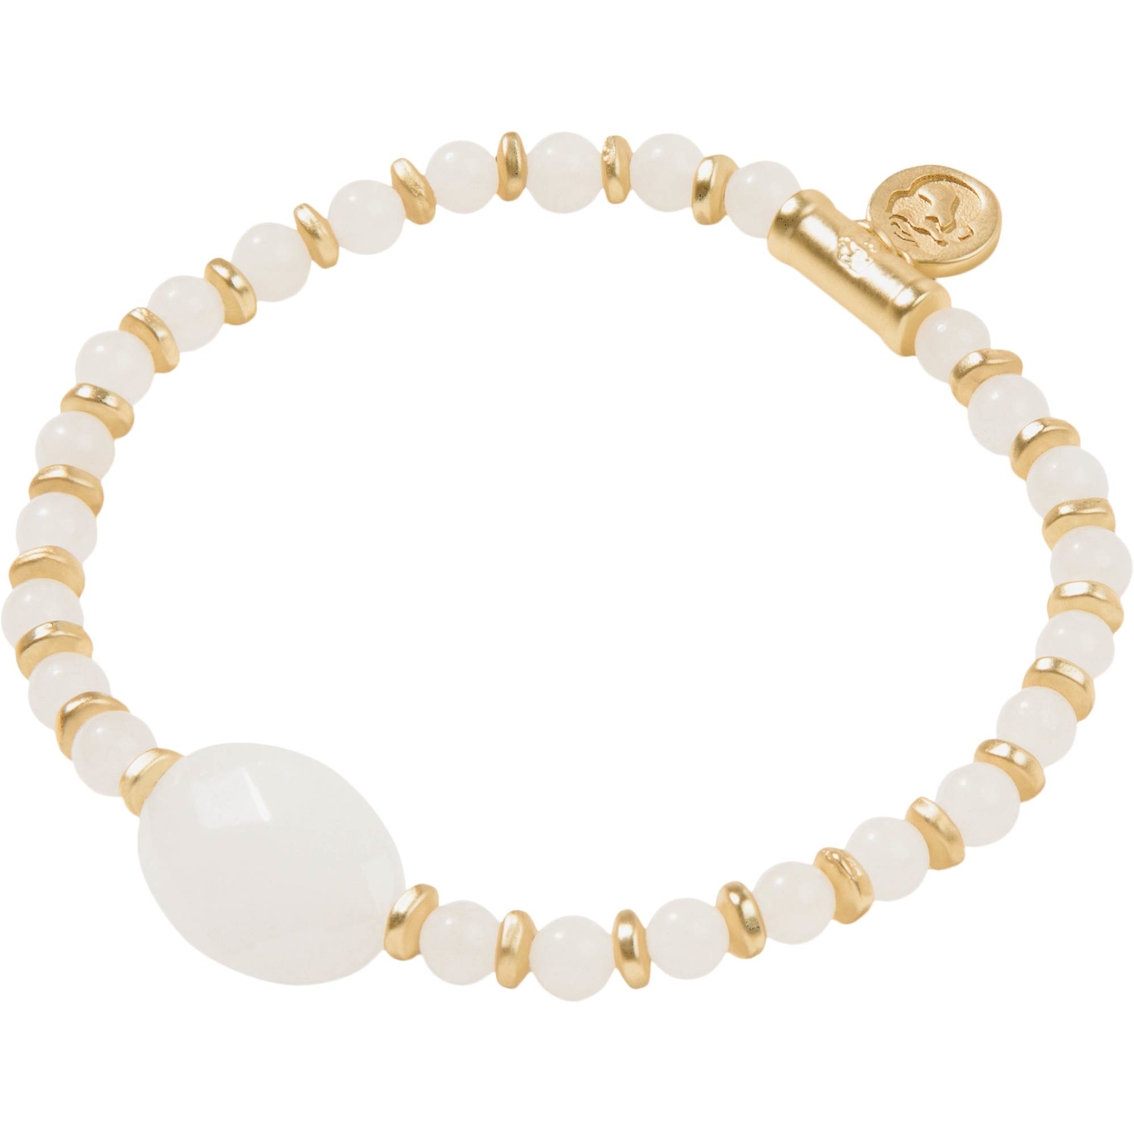 Spartina 449 Goldtone Stretch Bracelet | Fashion Bracelets | Jewelry ...